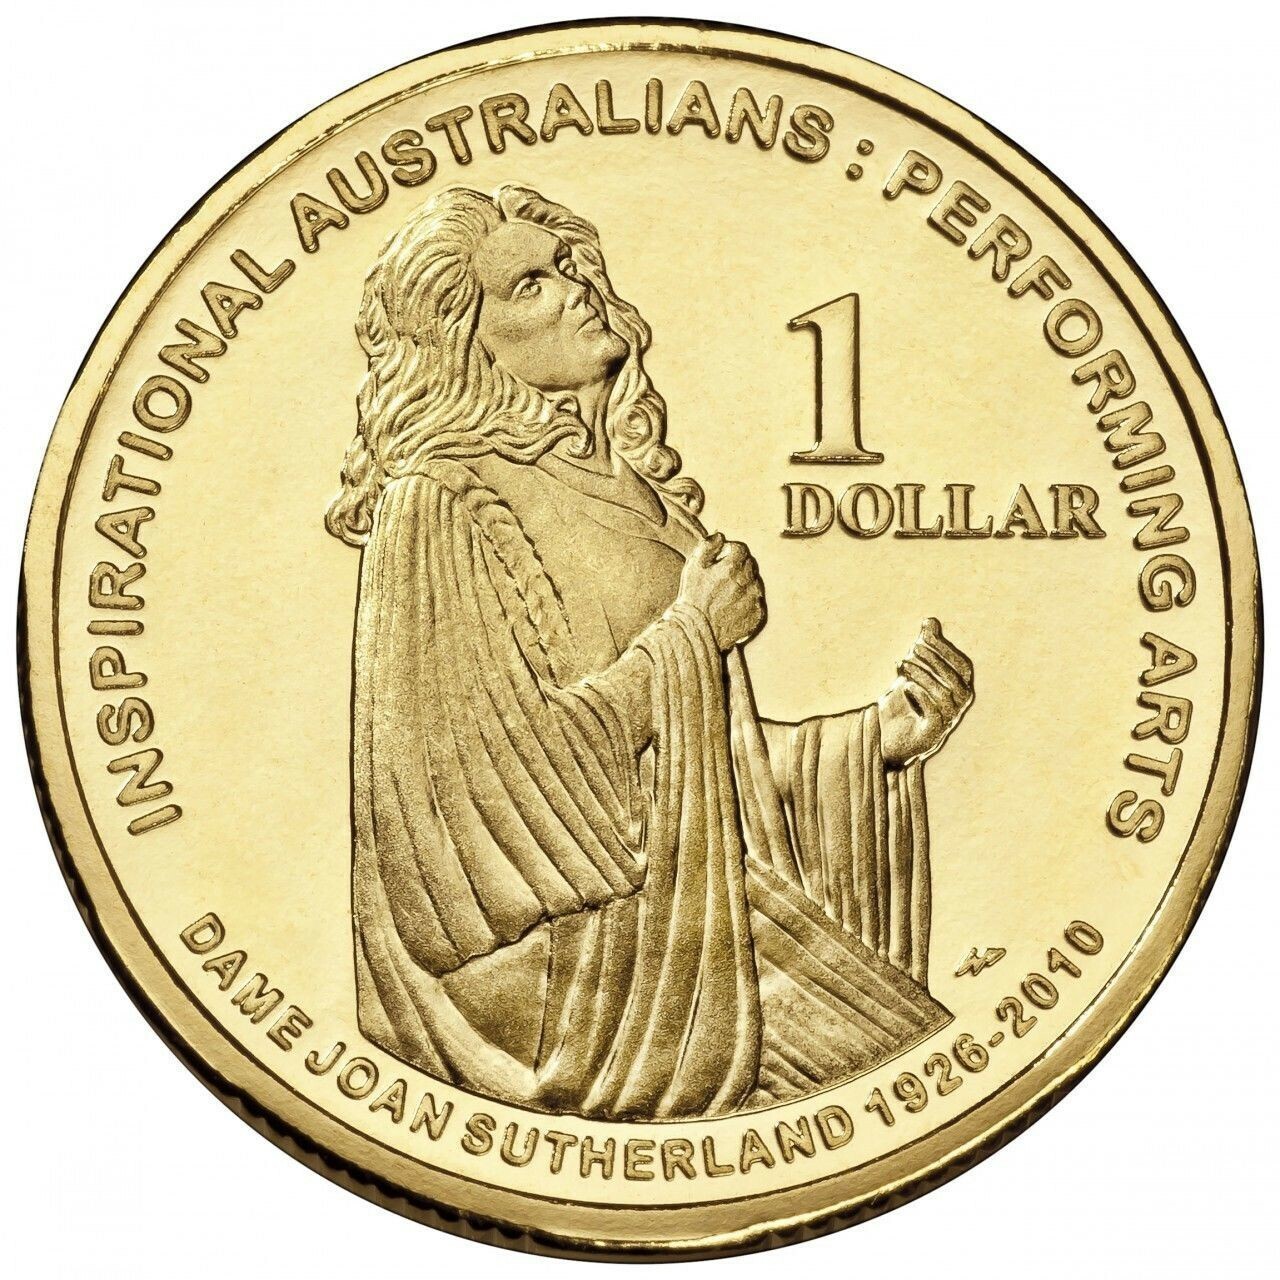 2011 - $1 Inspiring Australians Dame Joan Sutherland